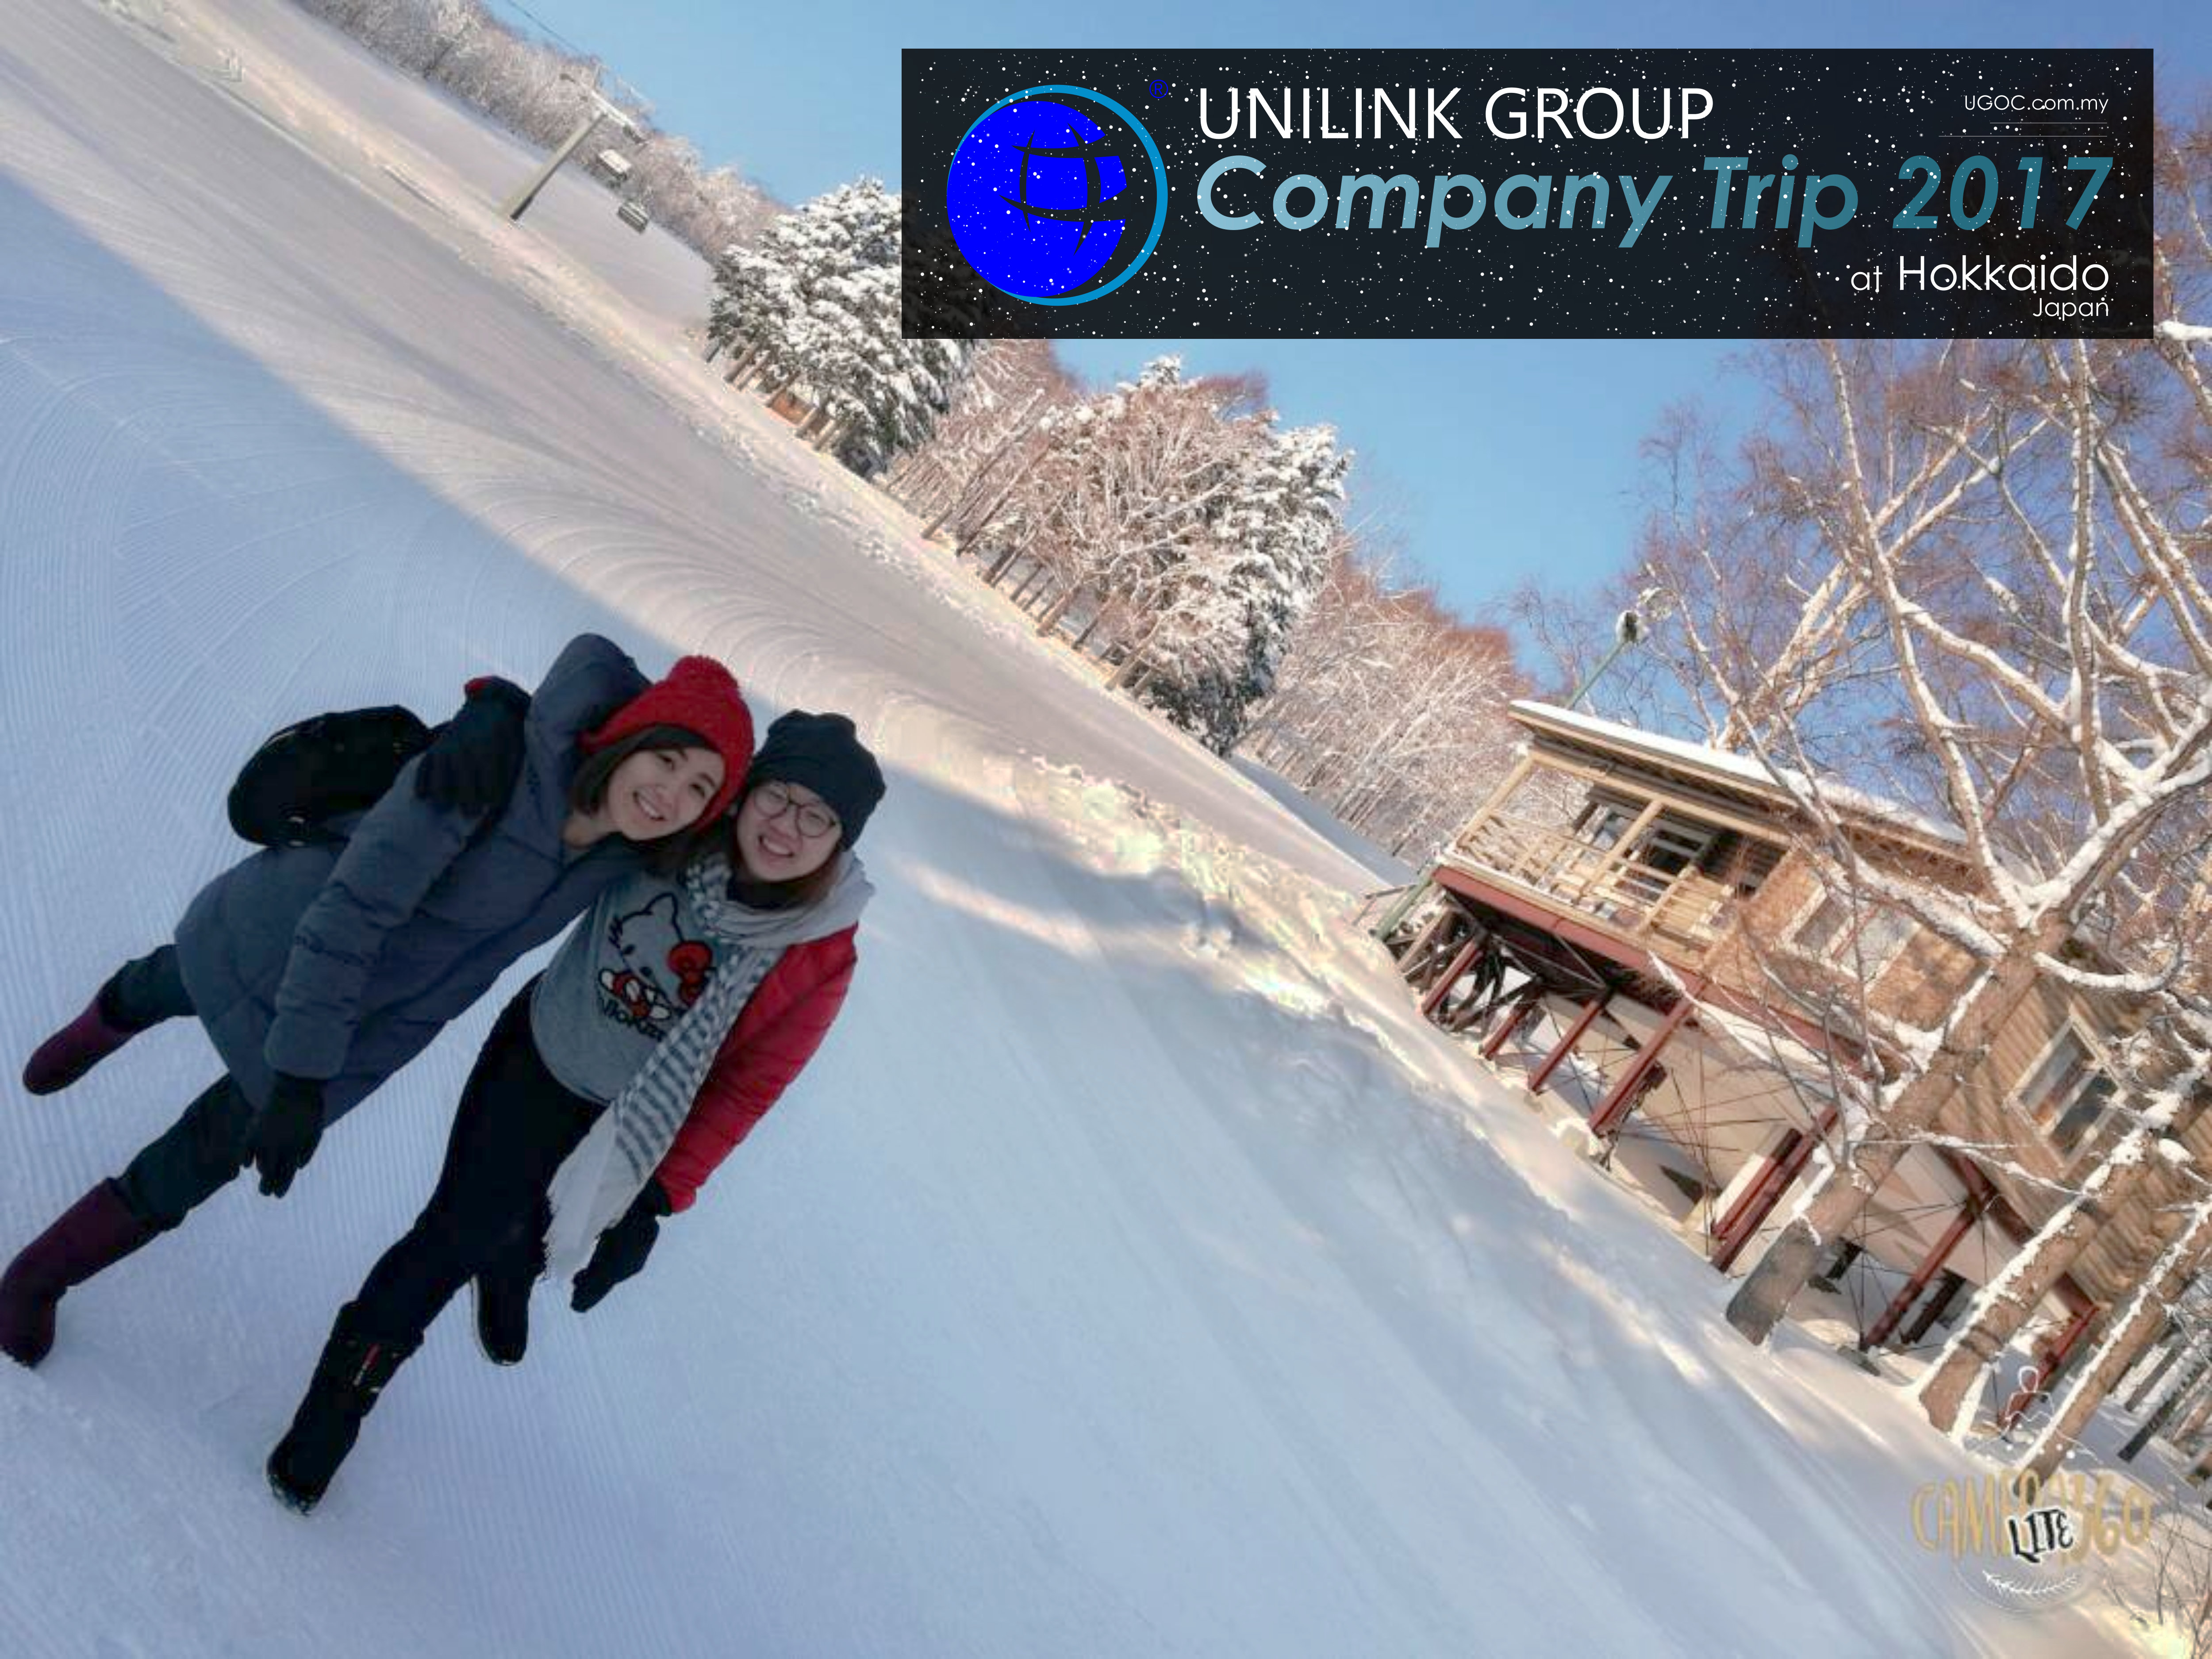 Unilink Group Company Trip 2017 from Agensi Pekerjaan Unilink Prospects Sdn Bhd at Hokkaido Japan 14